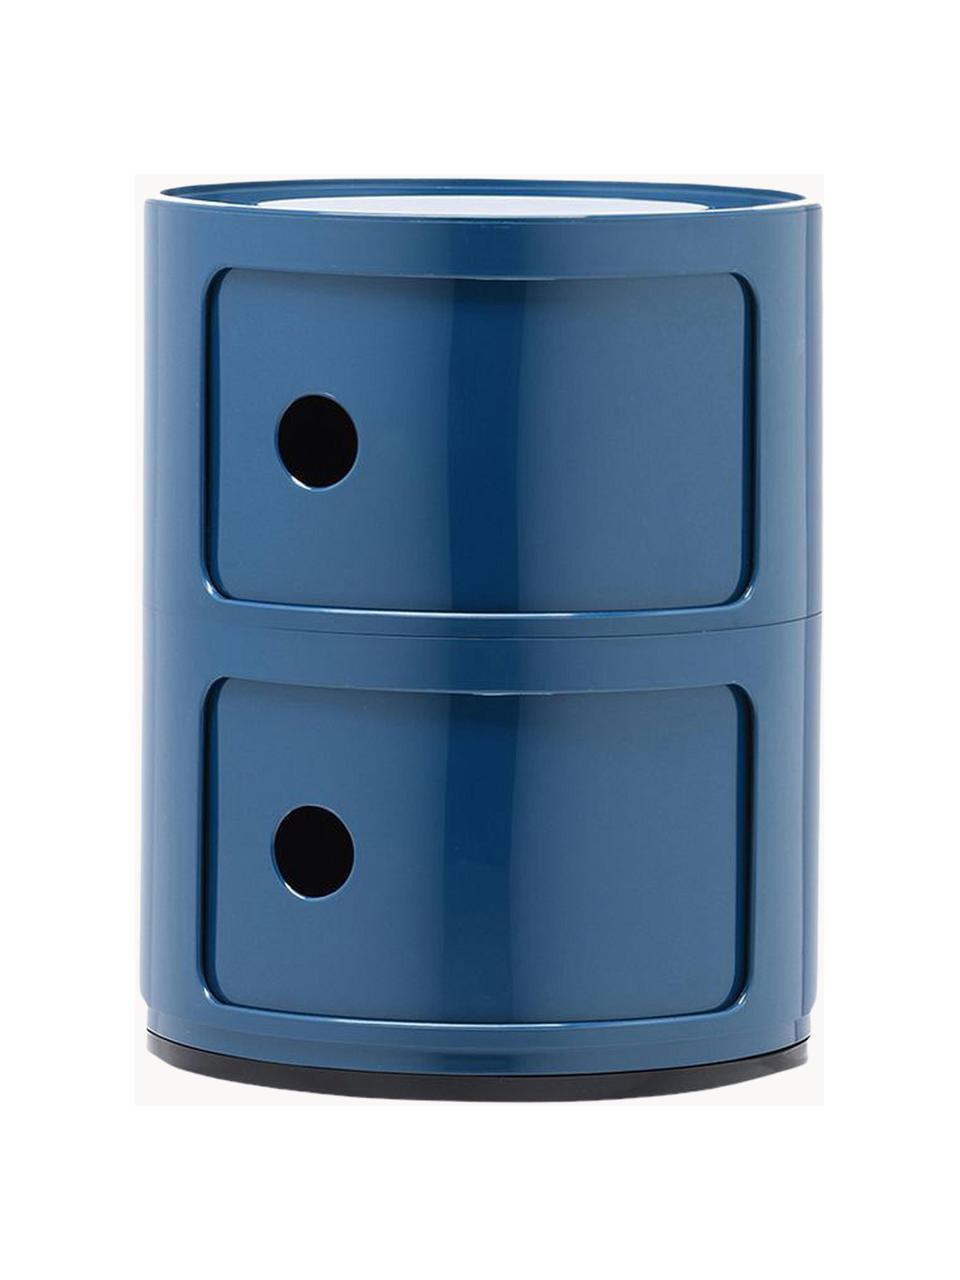 Design container Componibili, 2 modules, Kunststof (ABS), gelakt, Greenguard-gecertificeerd, Grijsblauw, glanzend, Ø 32 x H 40 cm